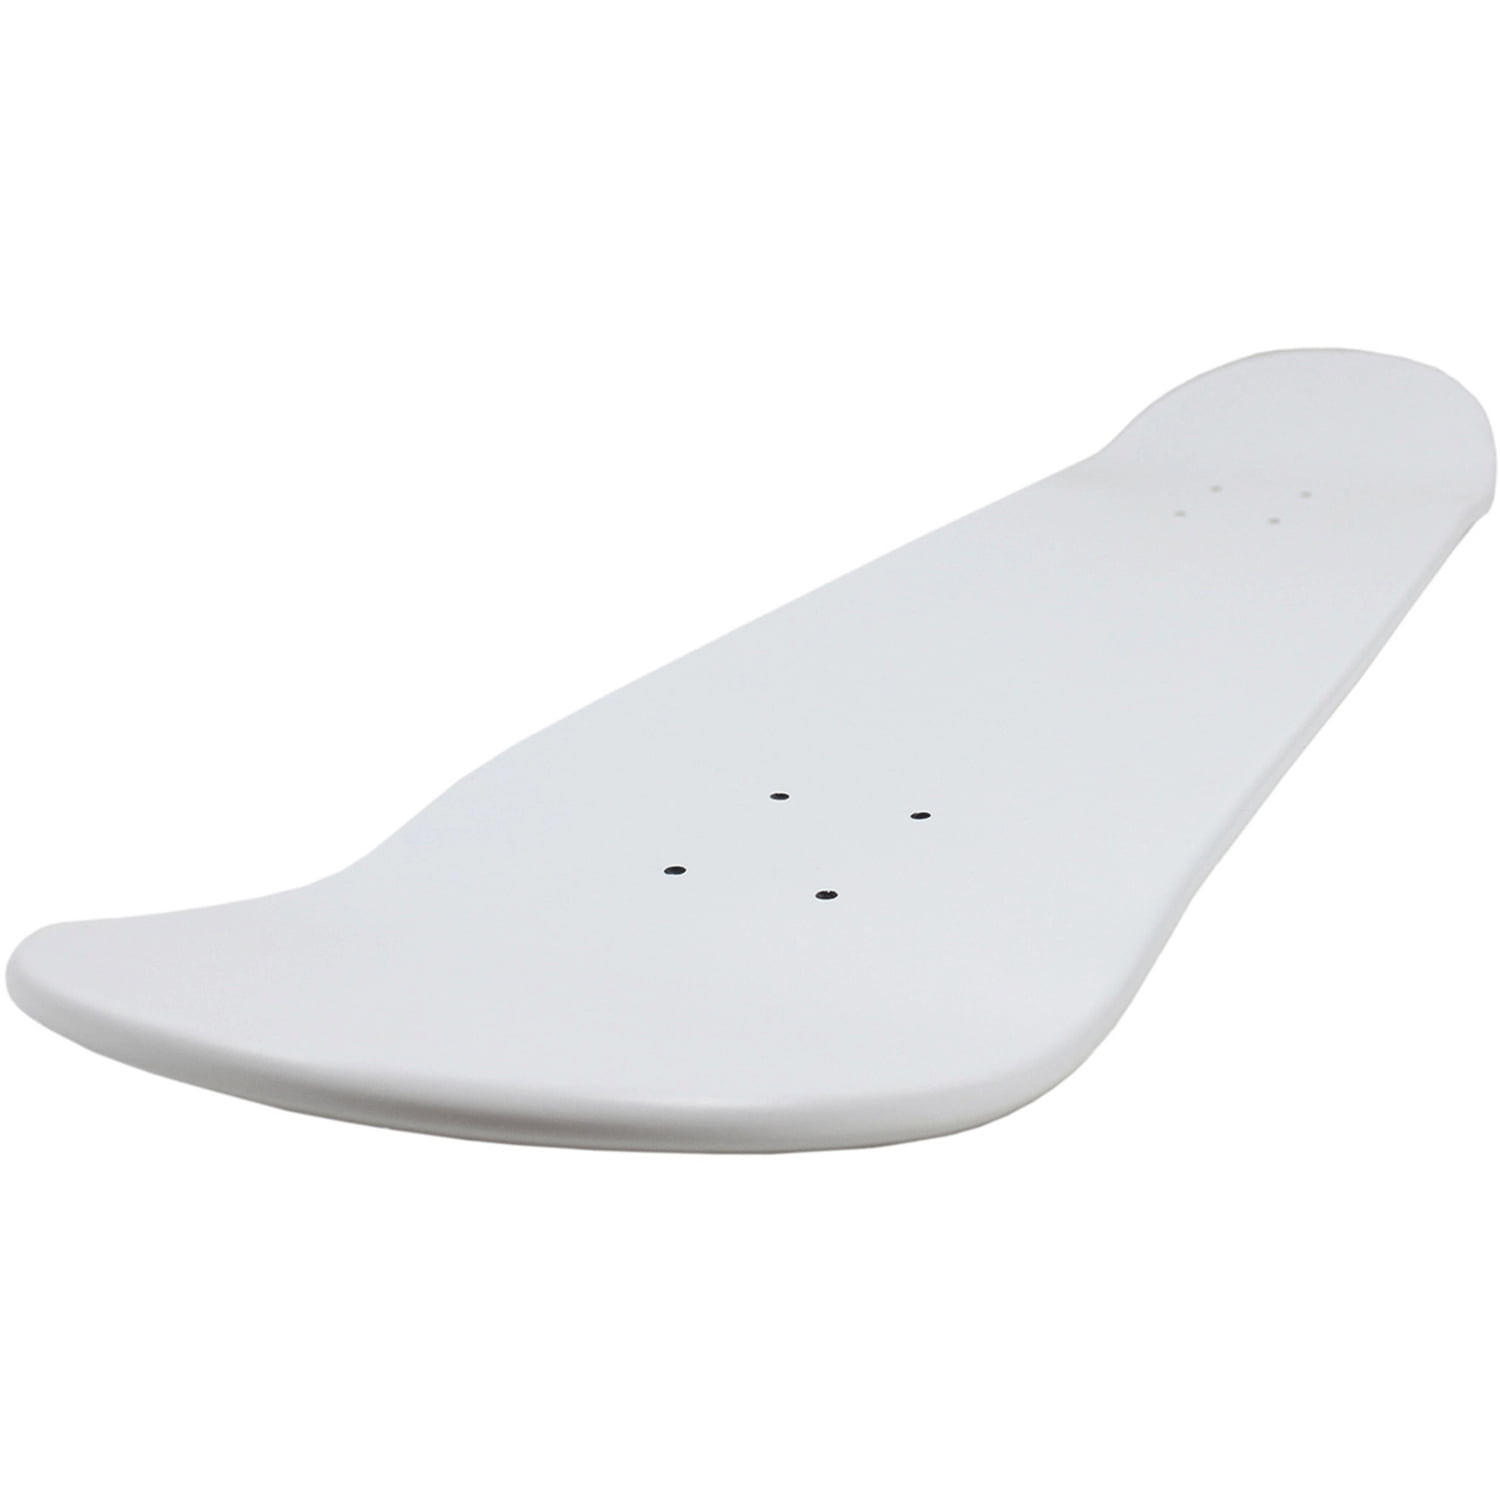 Skateboard Deck Blank Dipped White 8.5' BRAND NEW DECK SEALED IN SHRINK